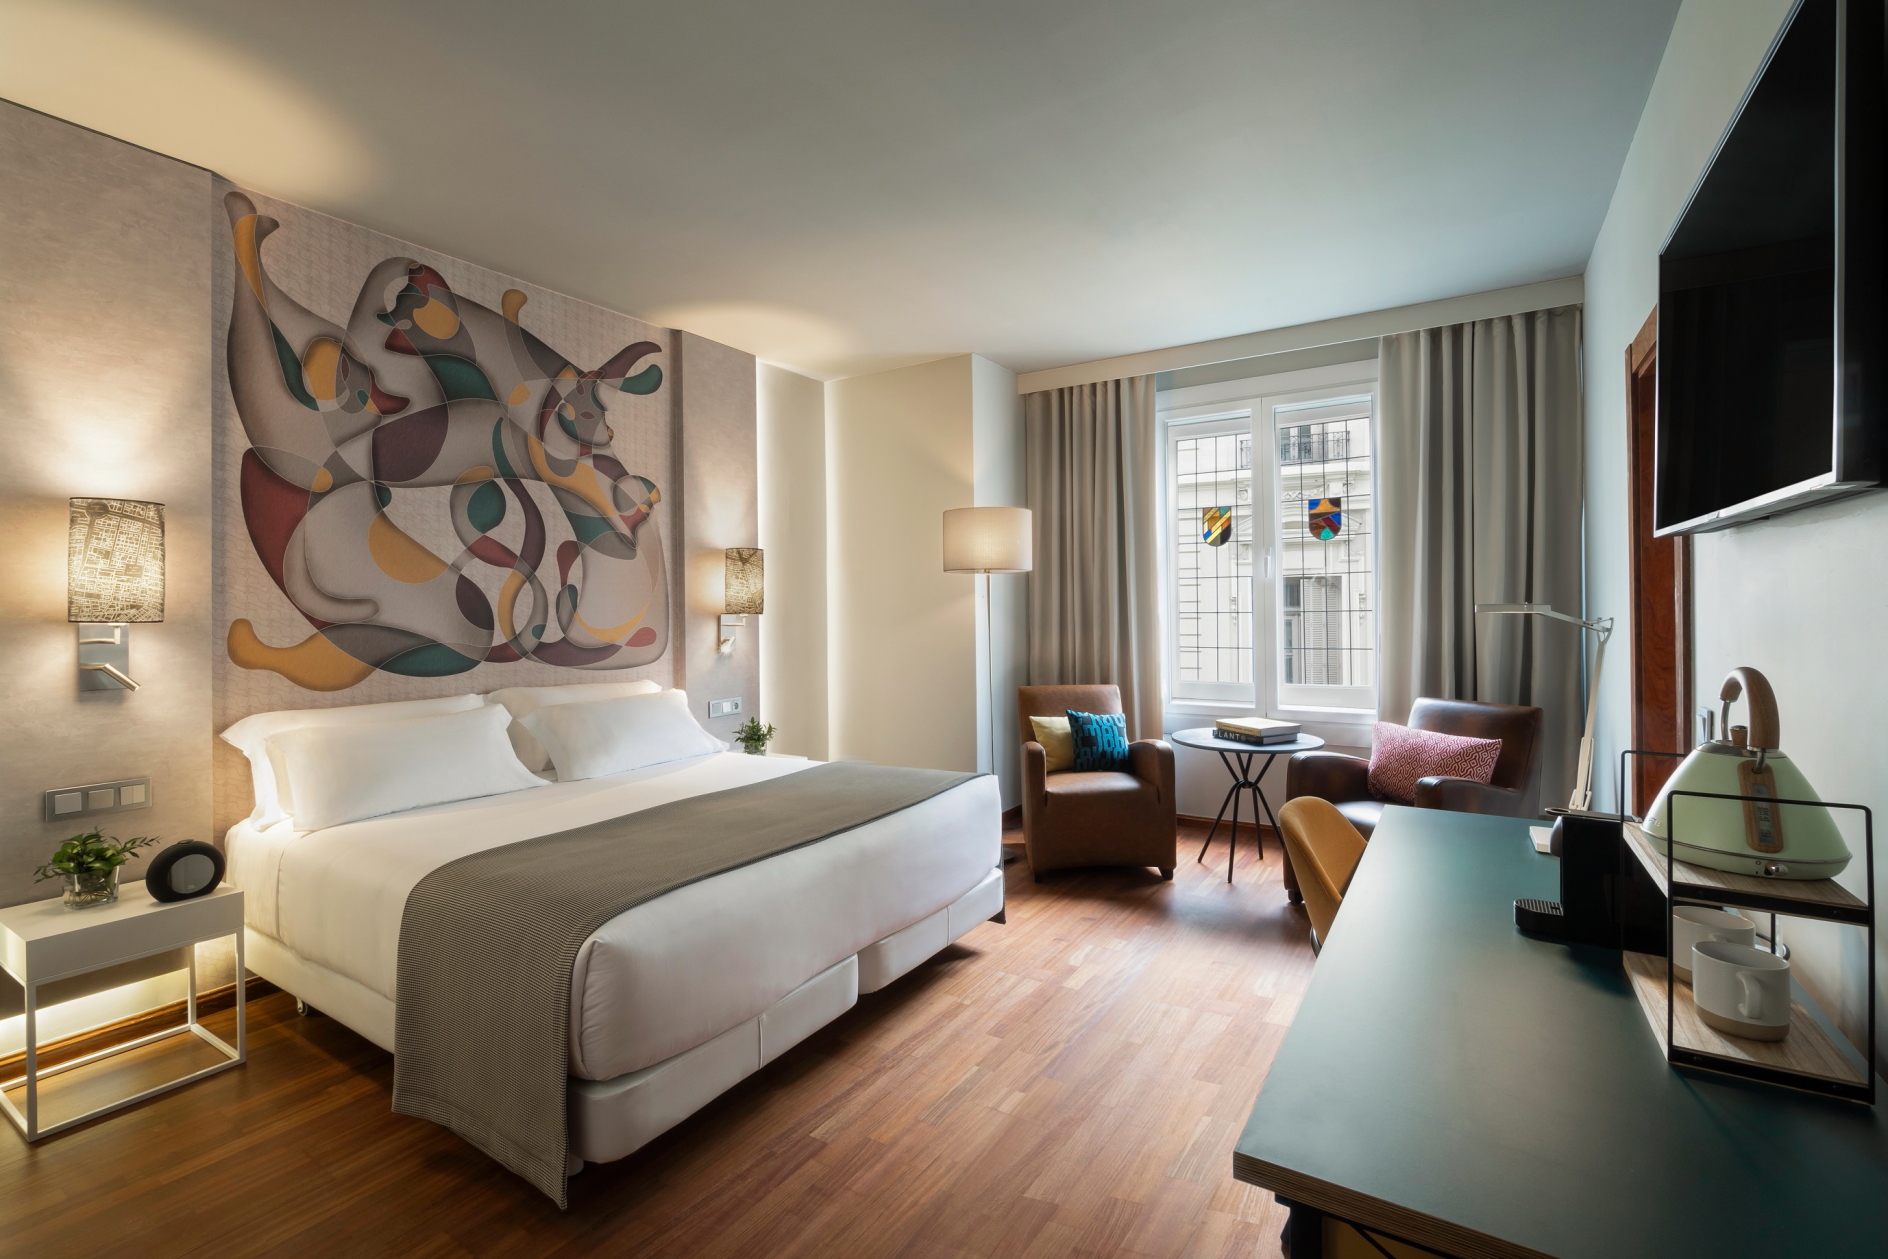 Superior Room at Avani Alonso Martinez Madrid Hotel. Click to enlarge.